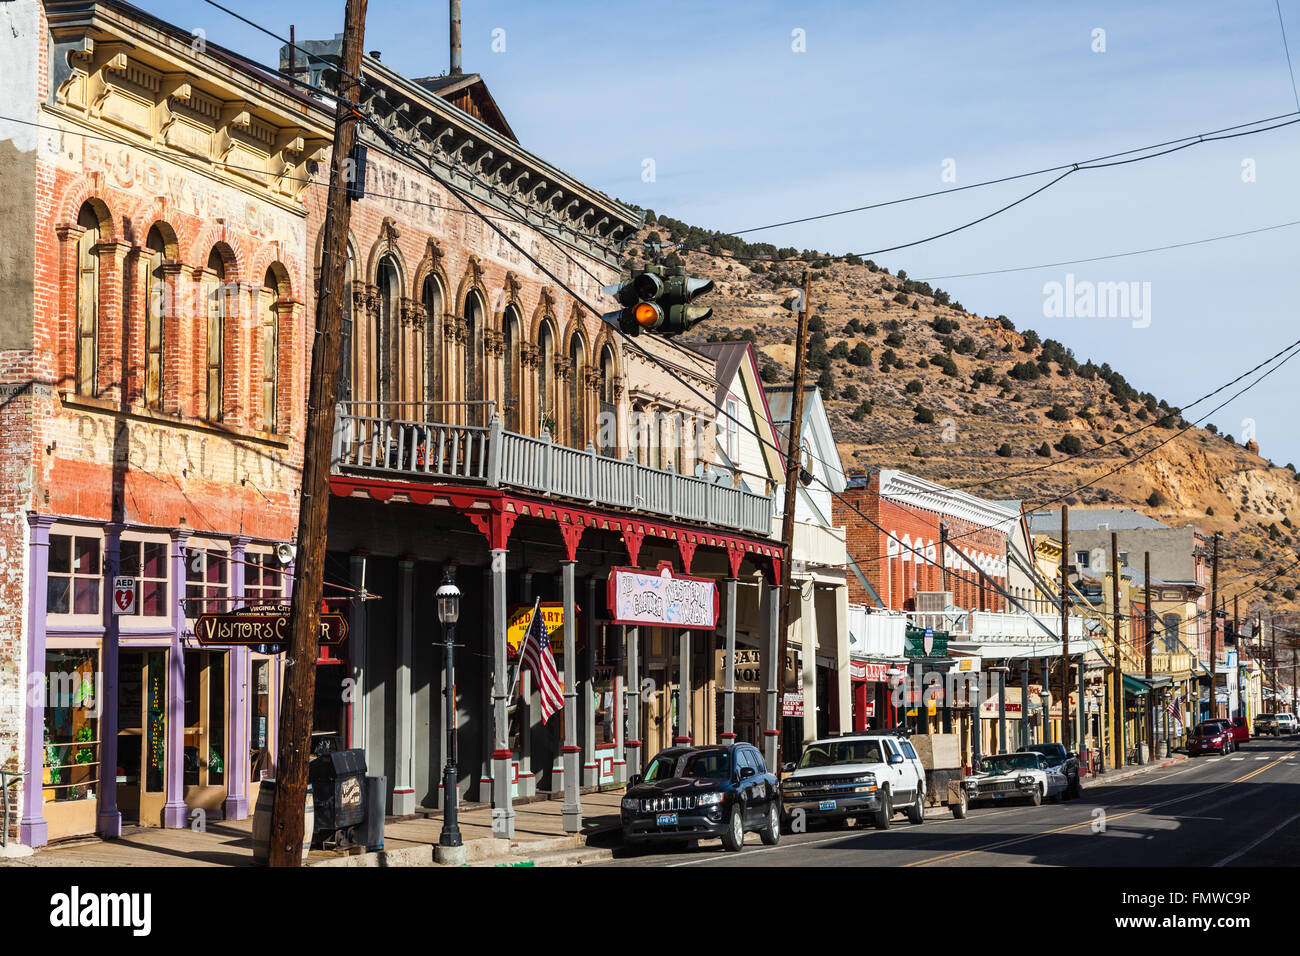 Scena di strada di Virginia City, Nevada, STATI UNITI D'AMERICA Foto Stock